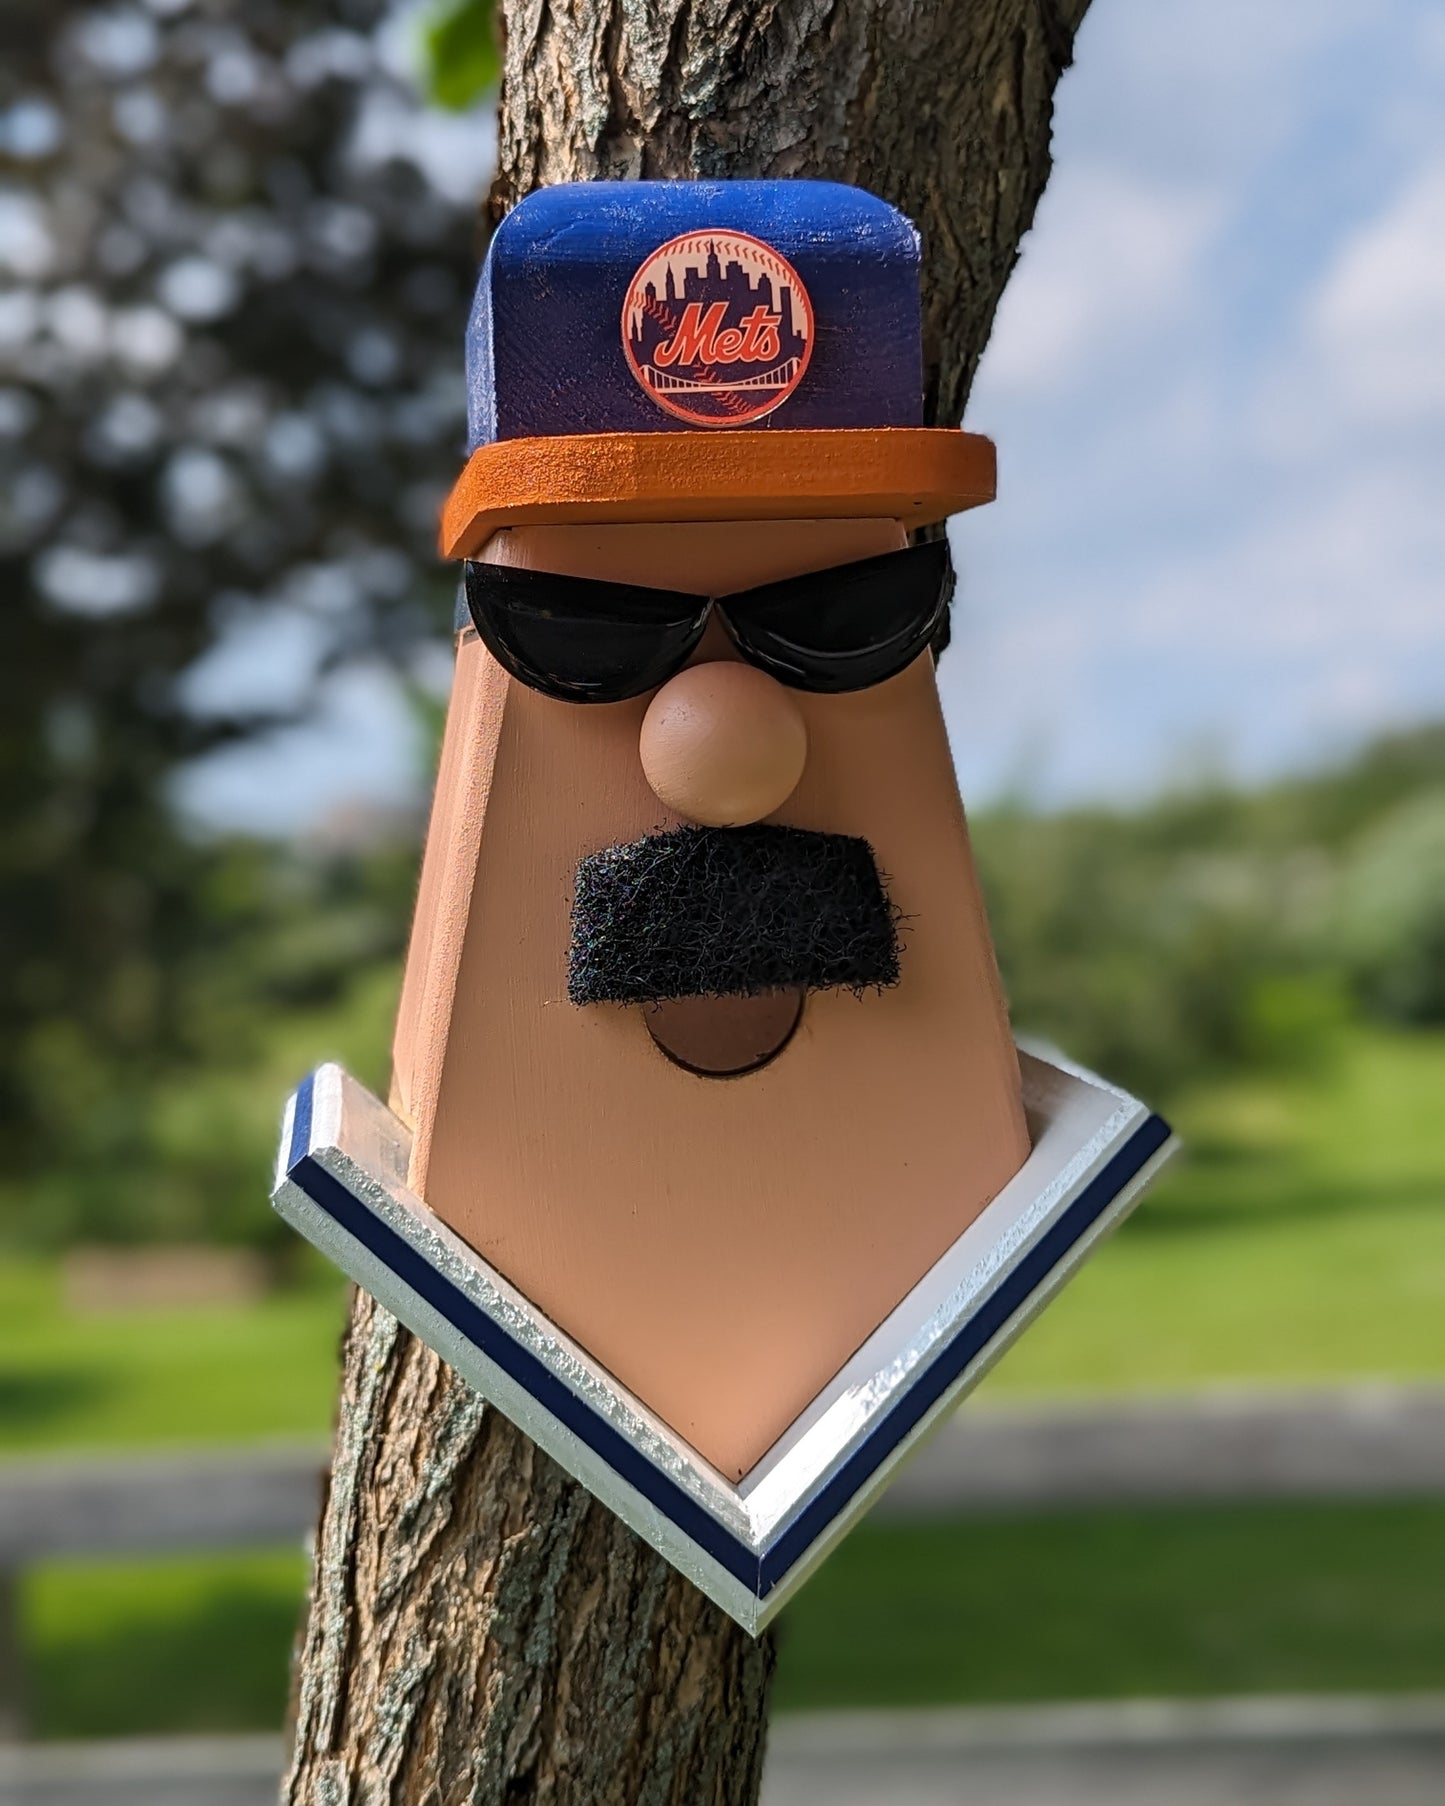 New York Mets birdhouse